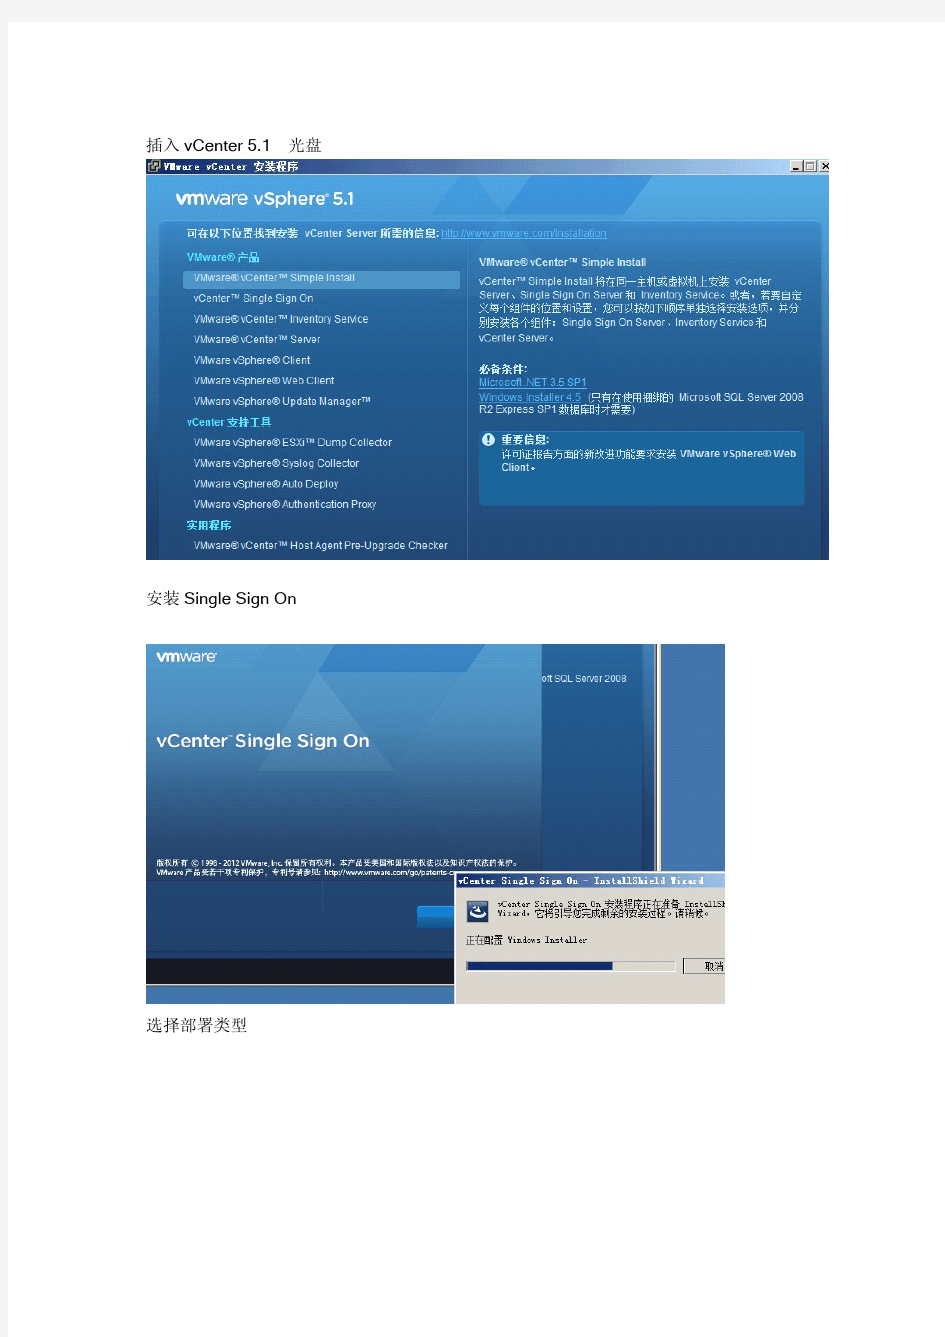 VMware Horizon View 5.2 安装和部署